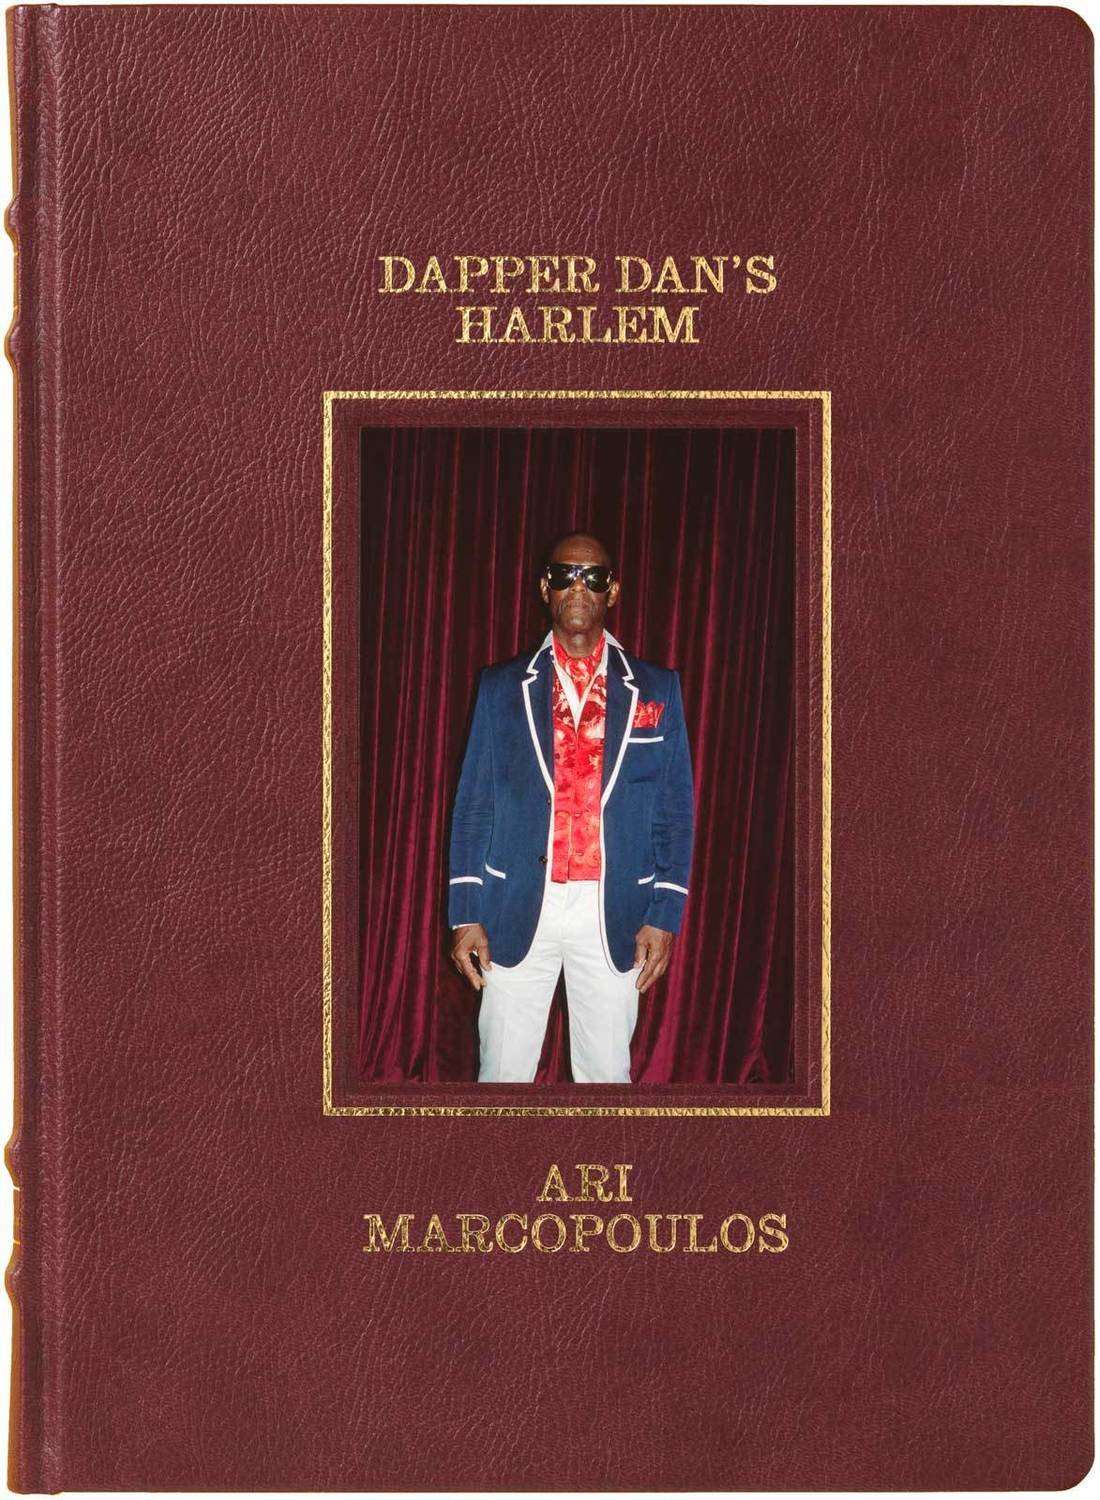 GUCCI Dapper Dan's Harlem by Ari Marcopoulos